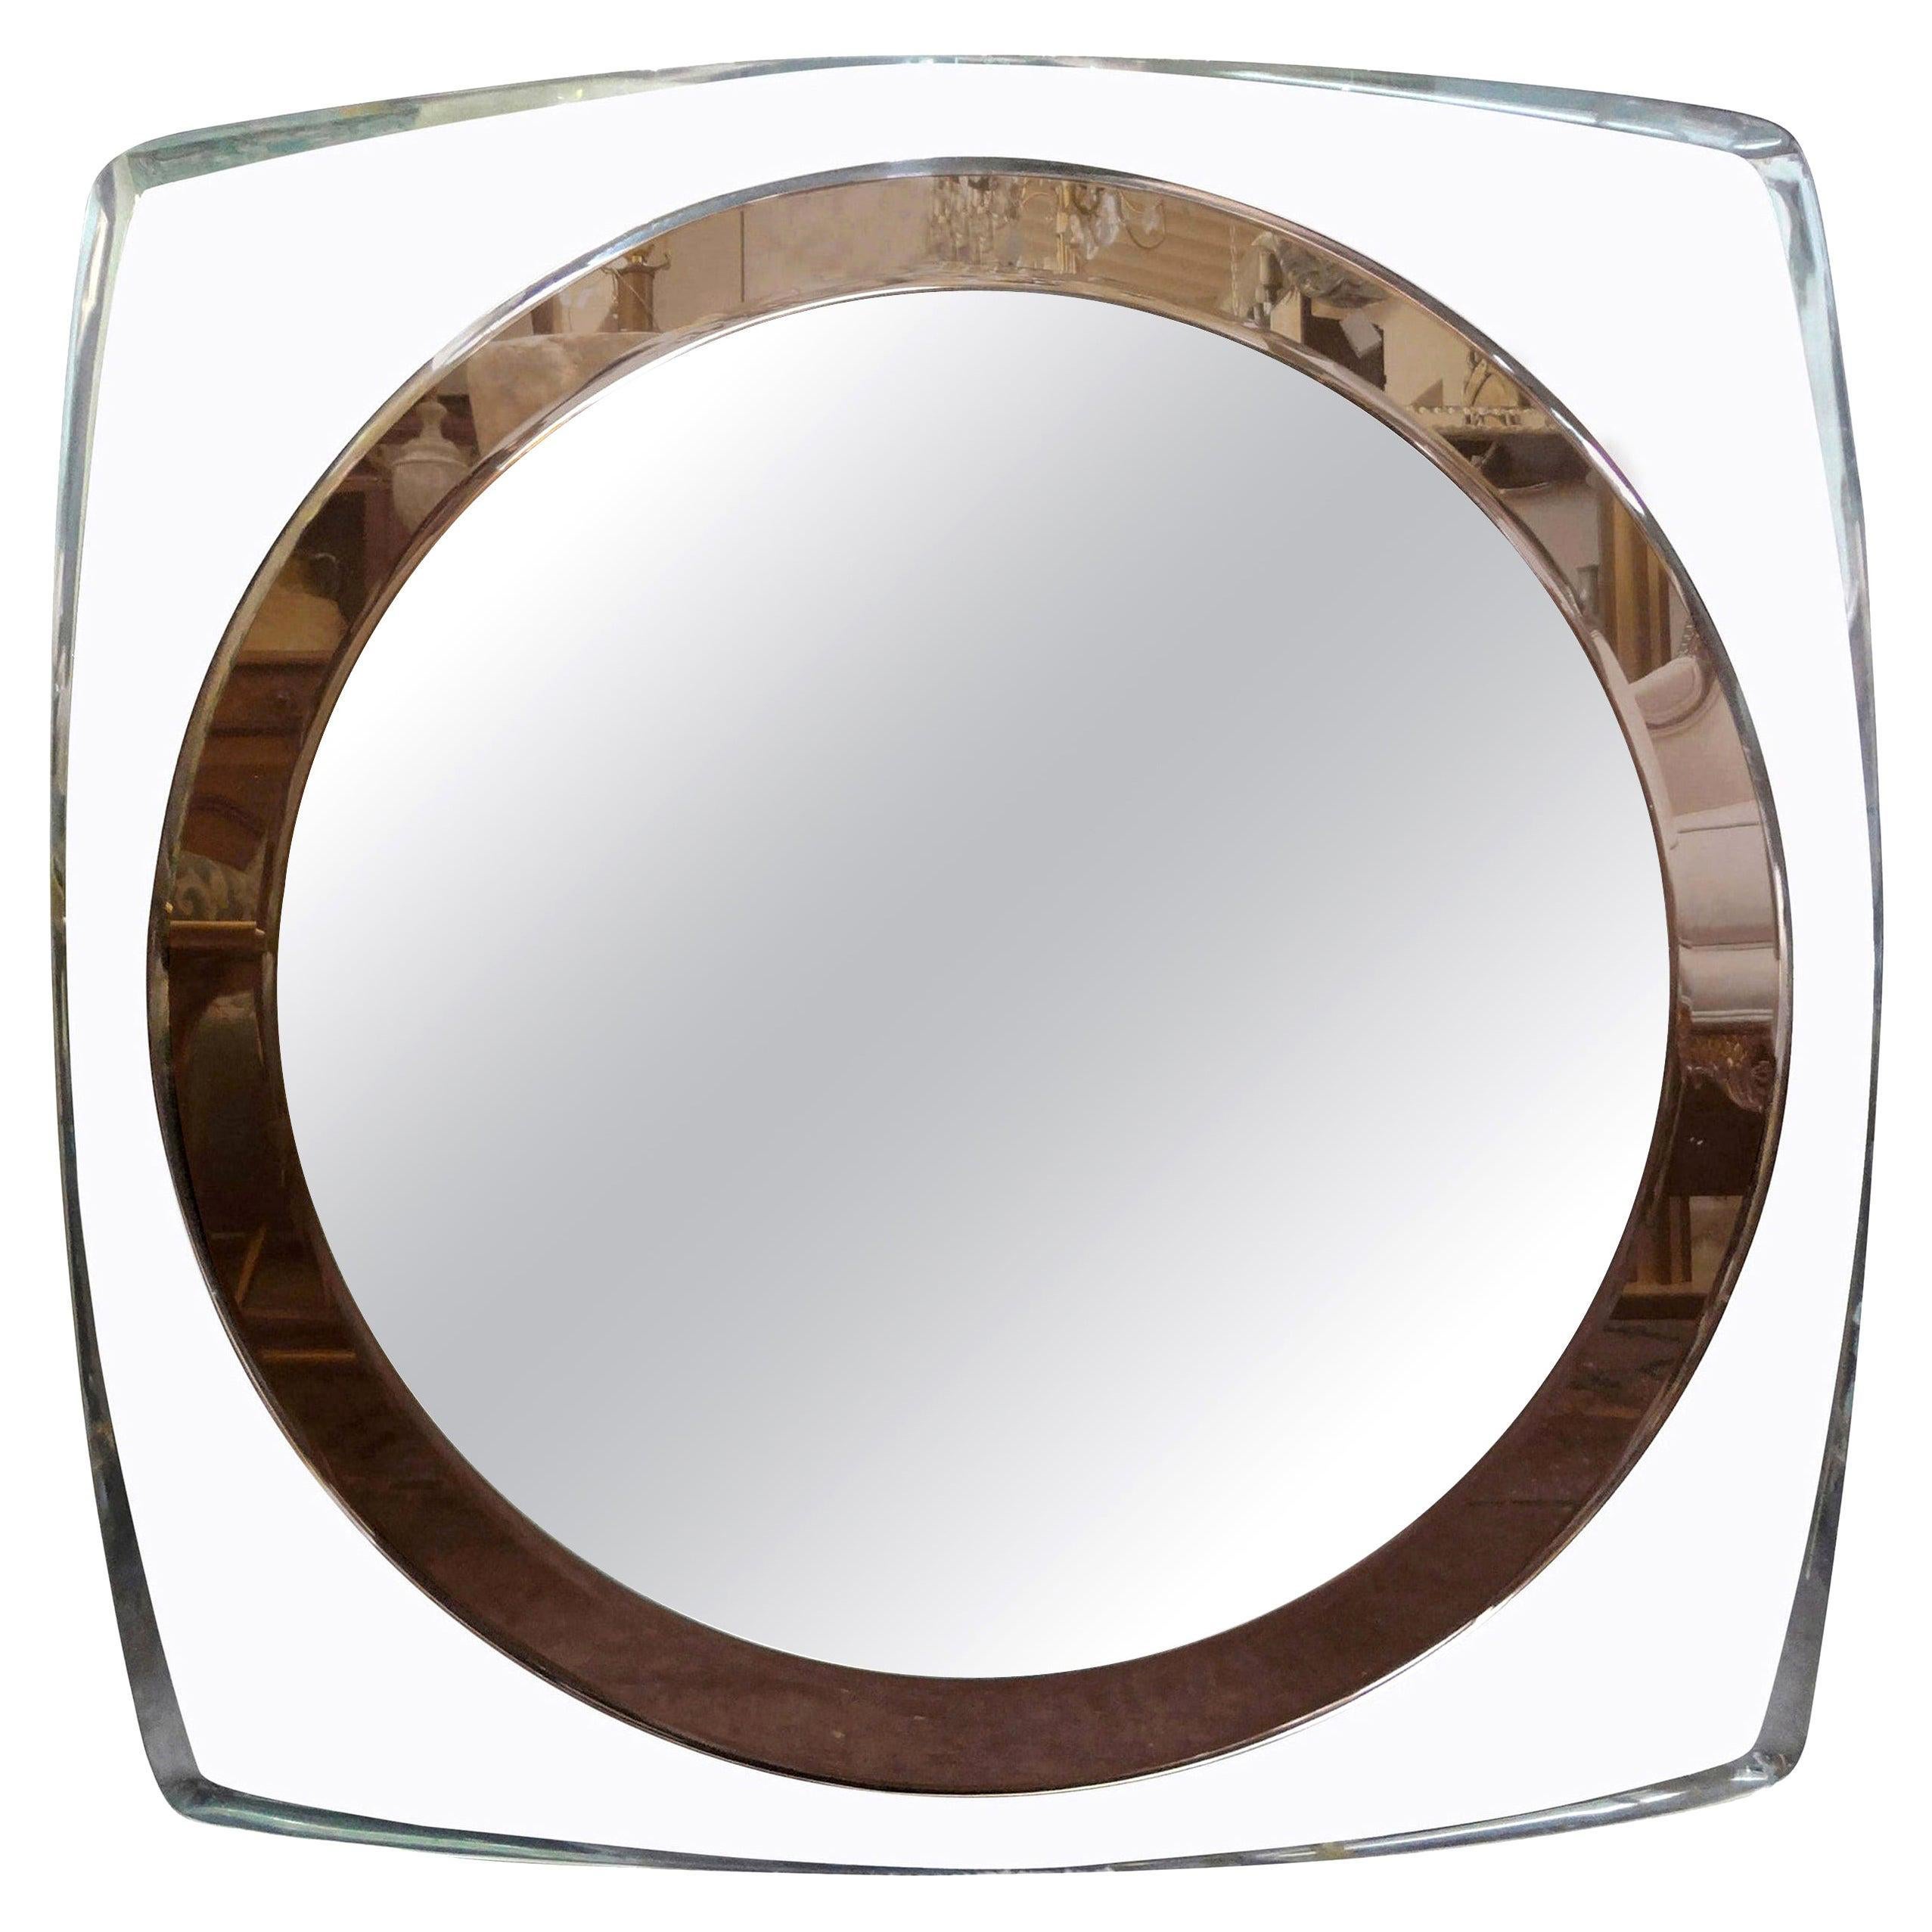 Italian Fontana Arte Inspired Square Beveled Mirror